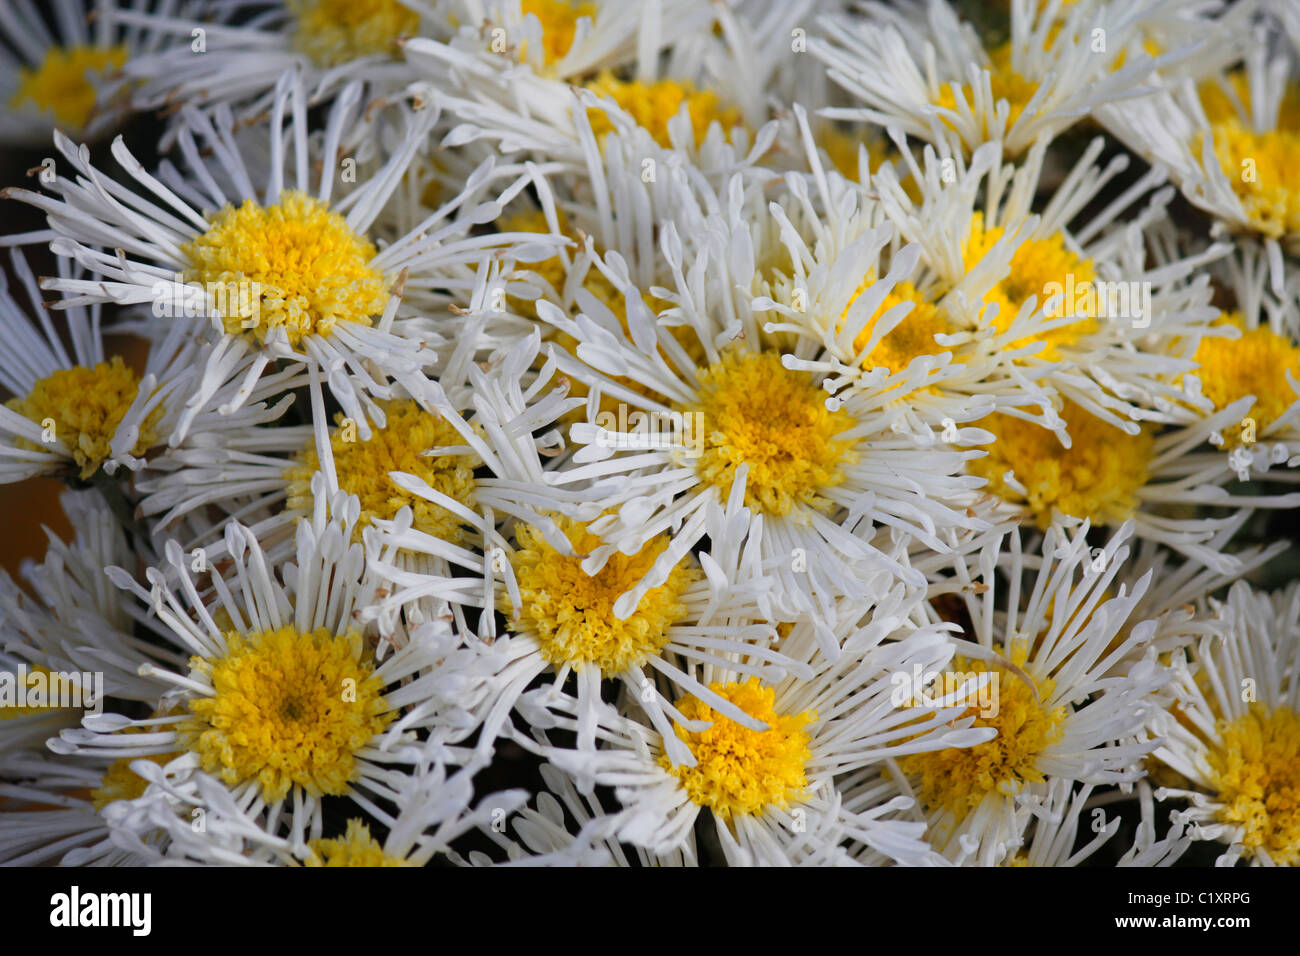 Chrysanthemum Grandiflorum High Resolution Stock Photography And Images Alamy